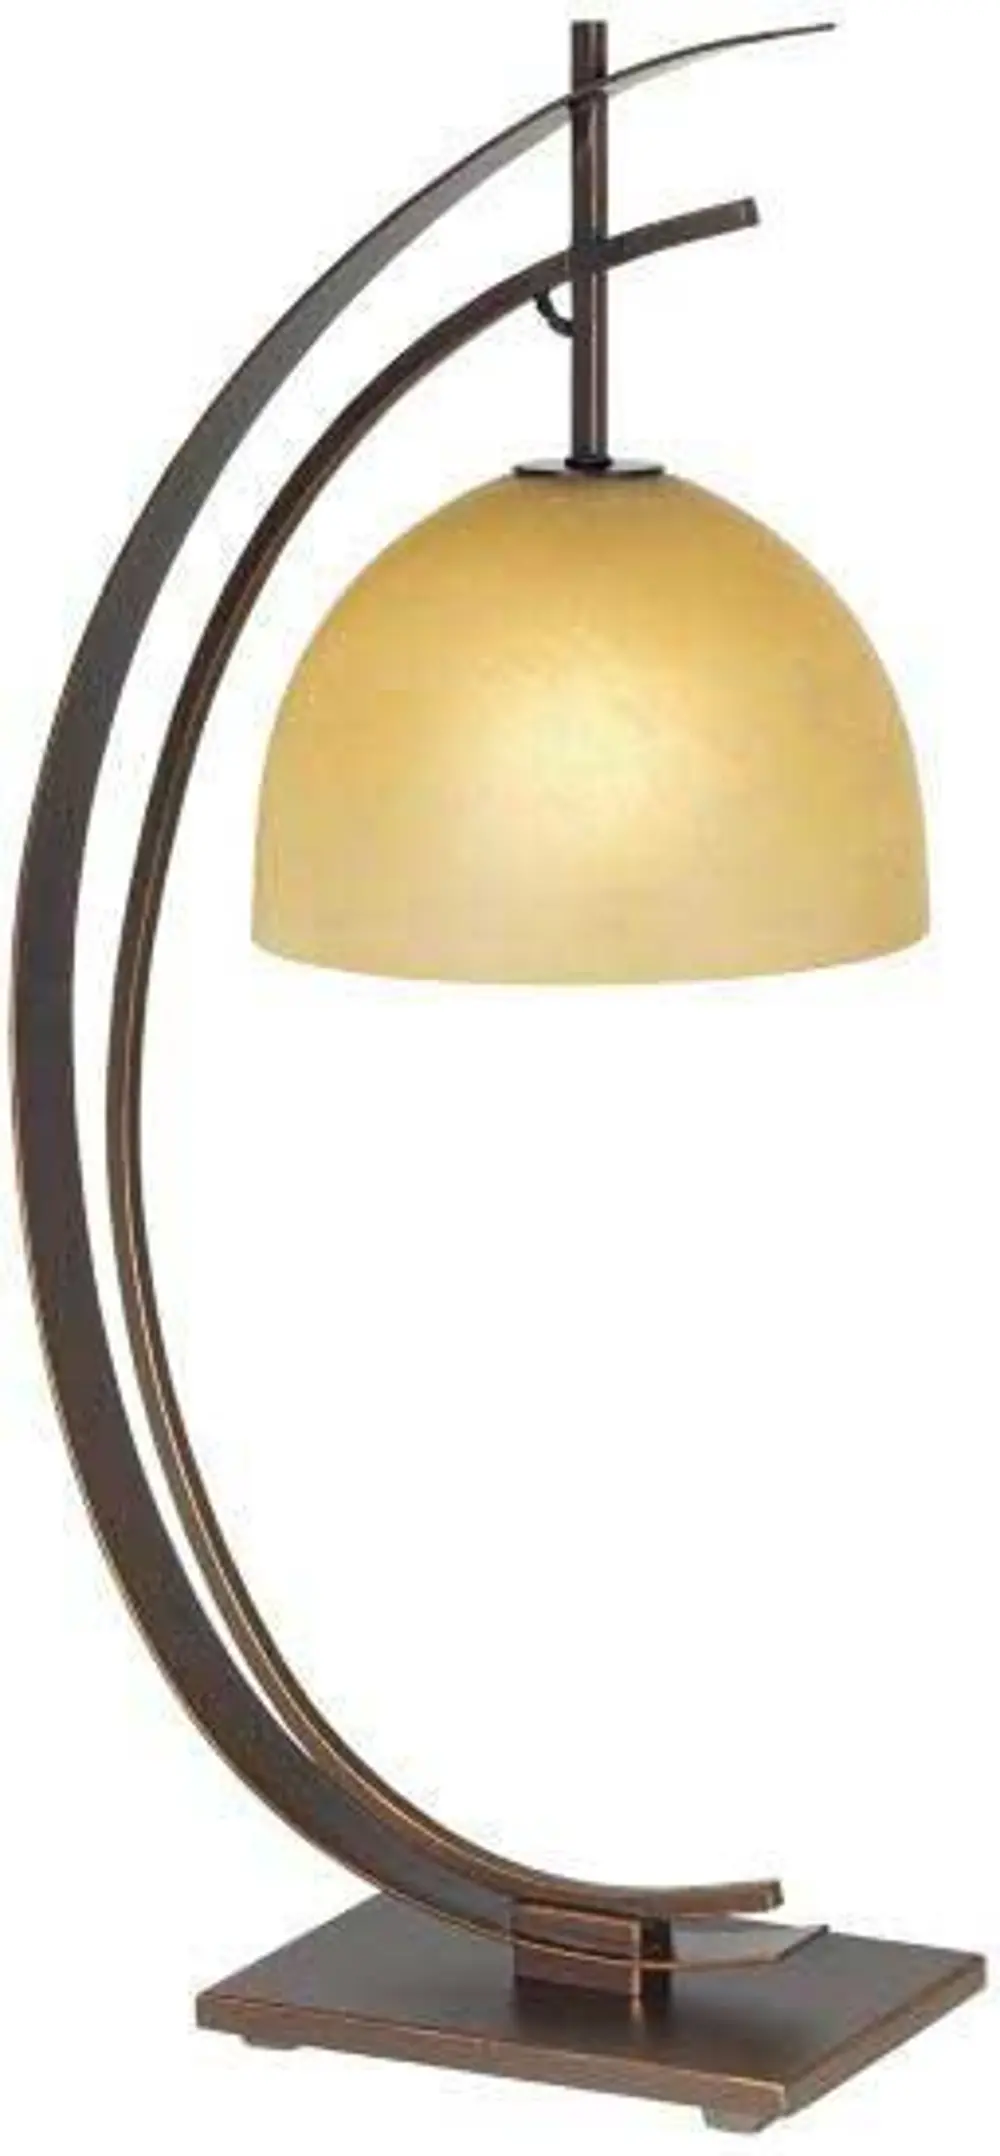 Orbit Bronze with Gold Edge Table Lamp-1